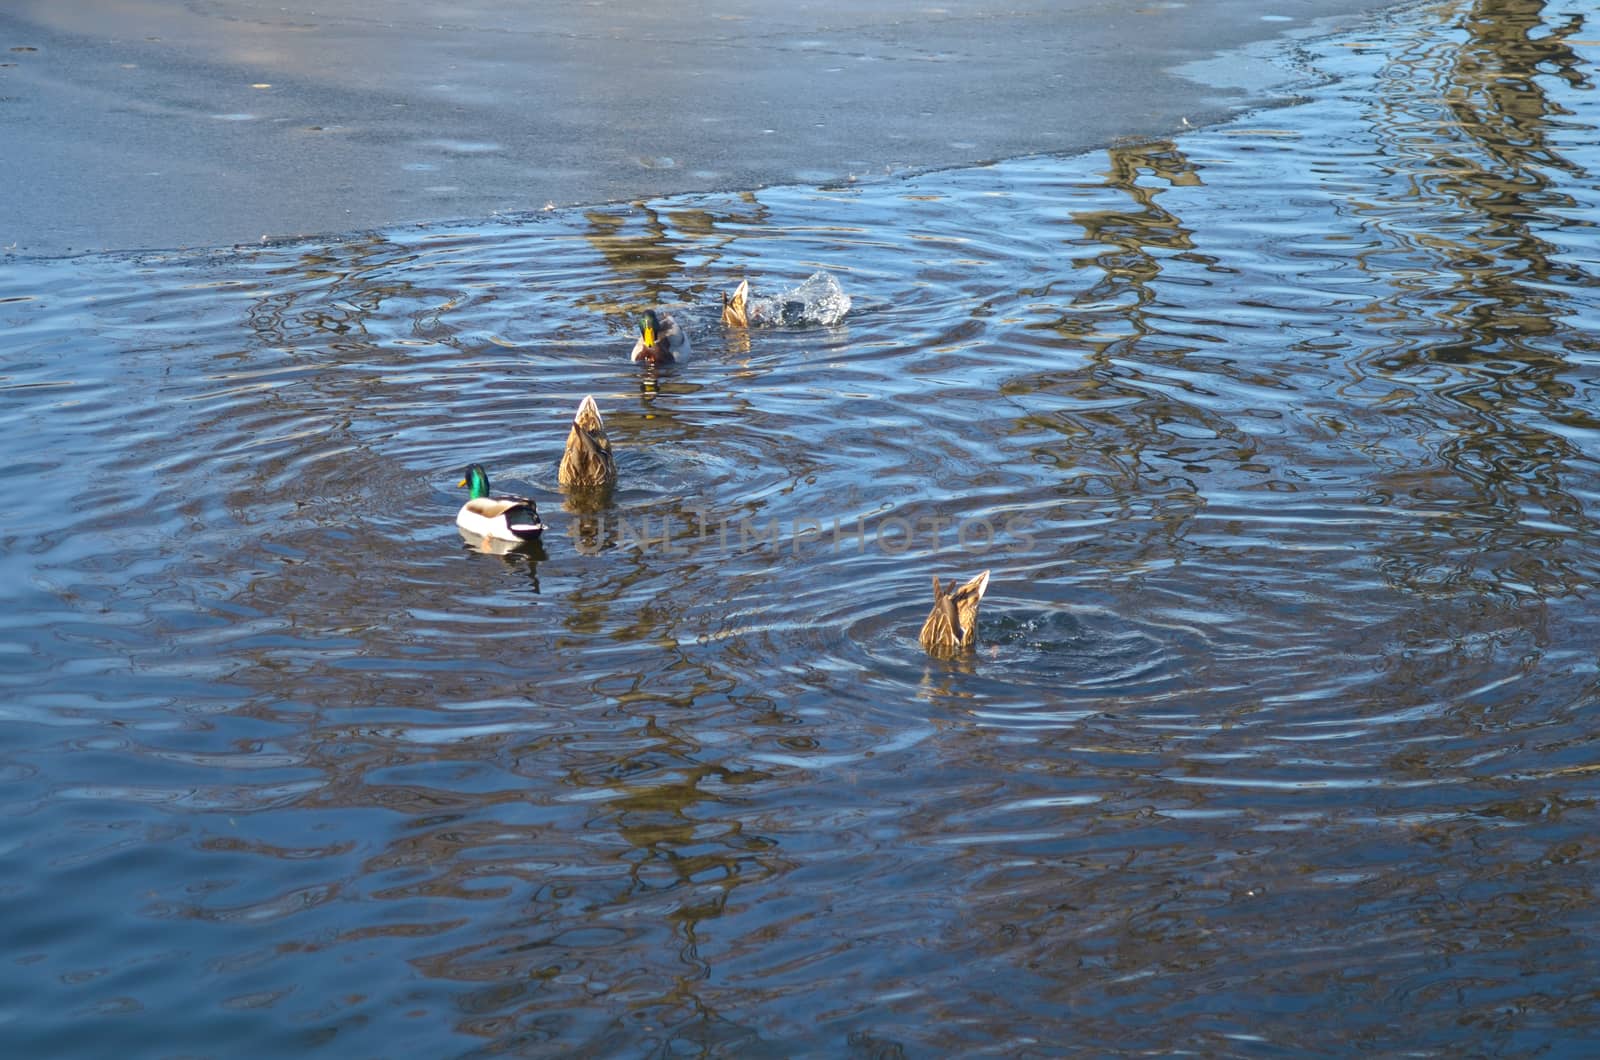 Ducks in the lake. Yanukovych Mezhigorie. Ukraine